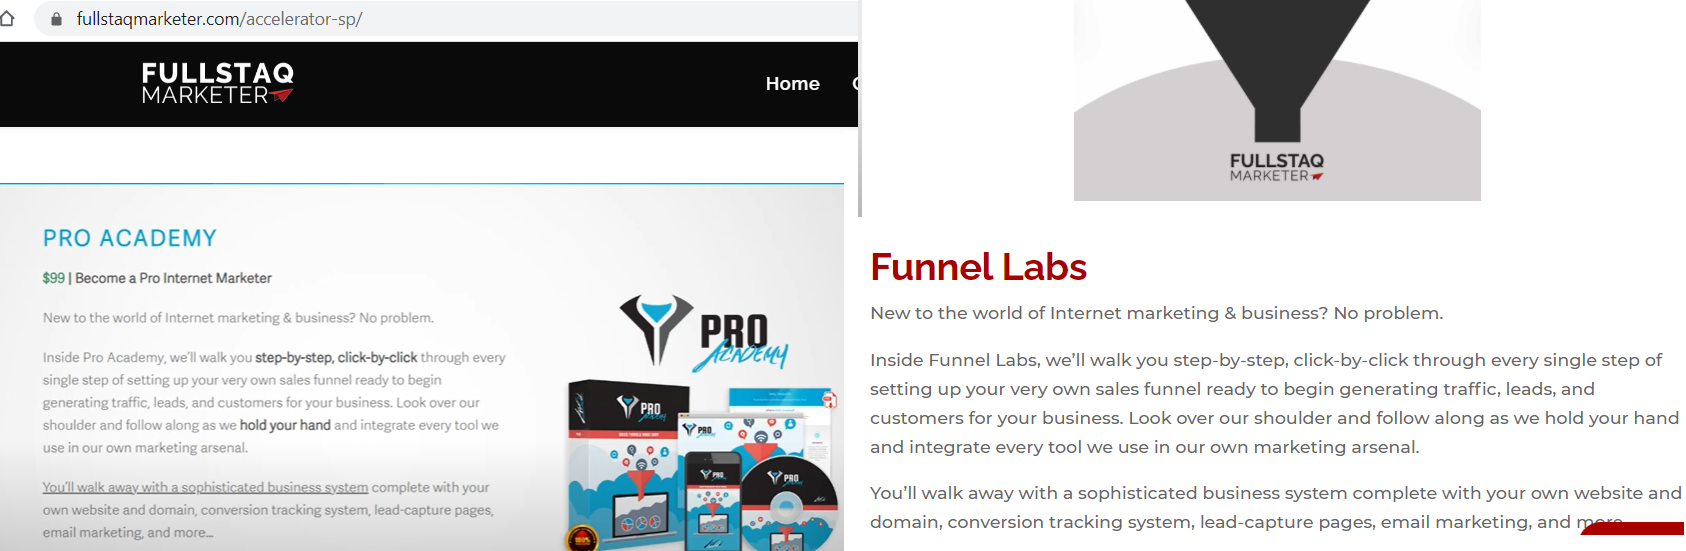 funnel labs fullstaq marketer screenshot